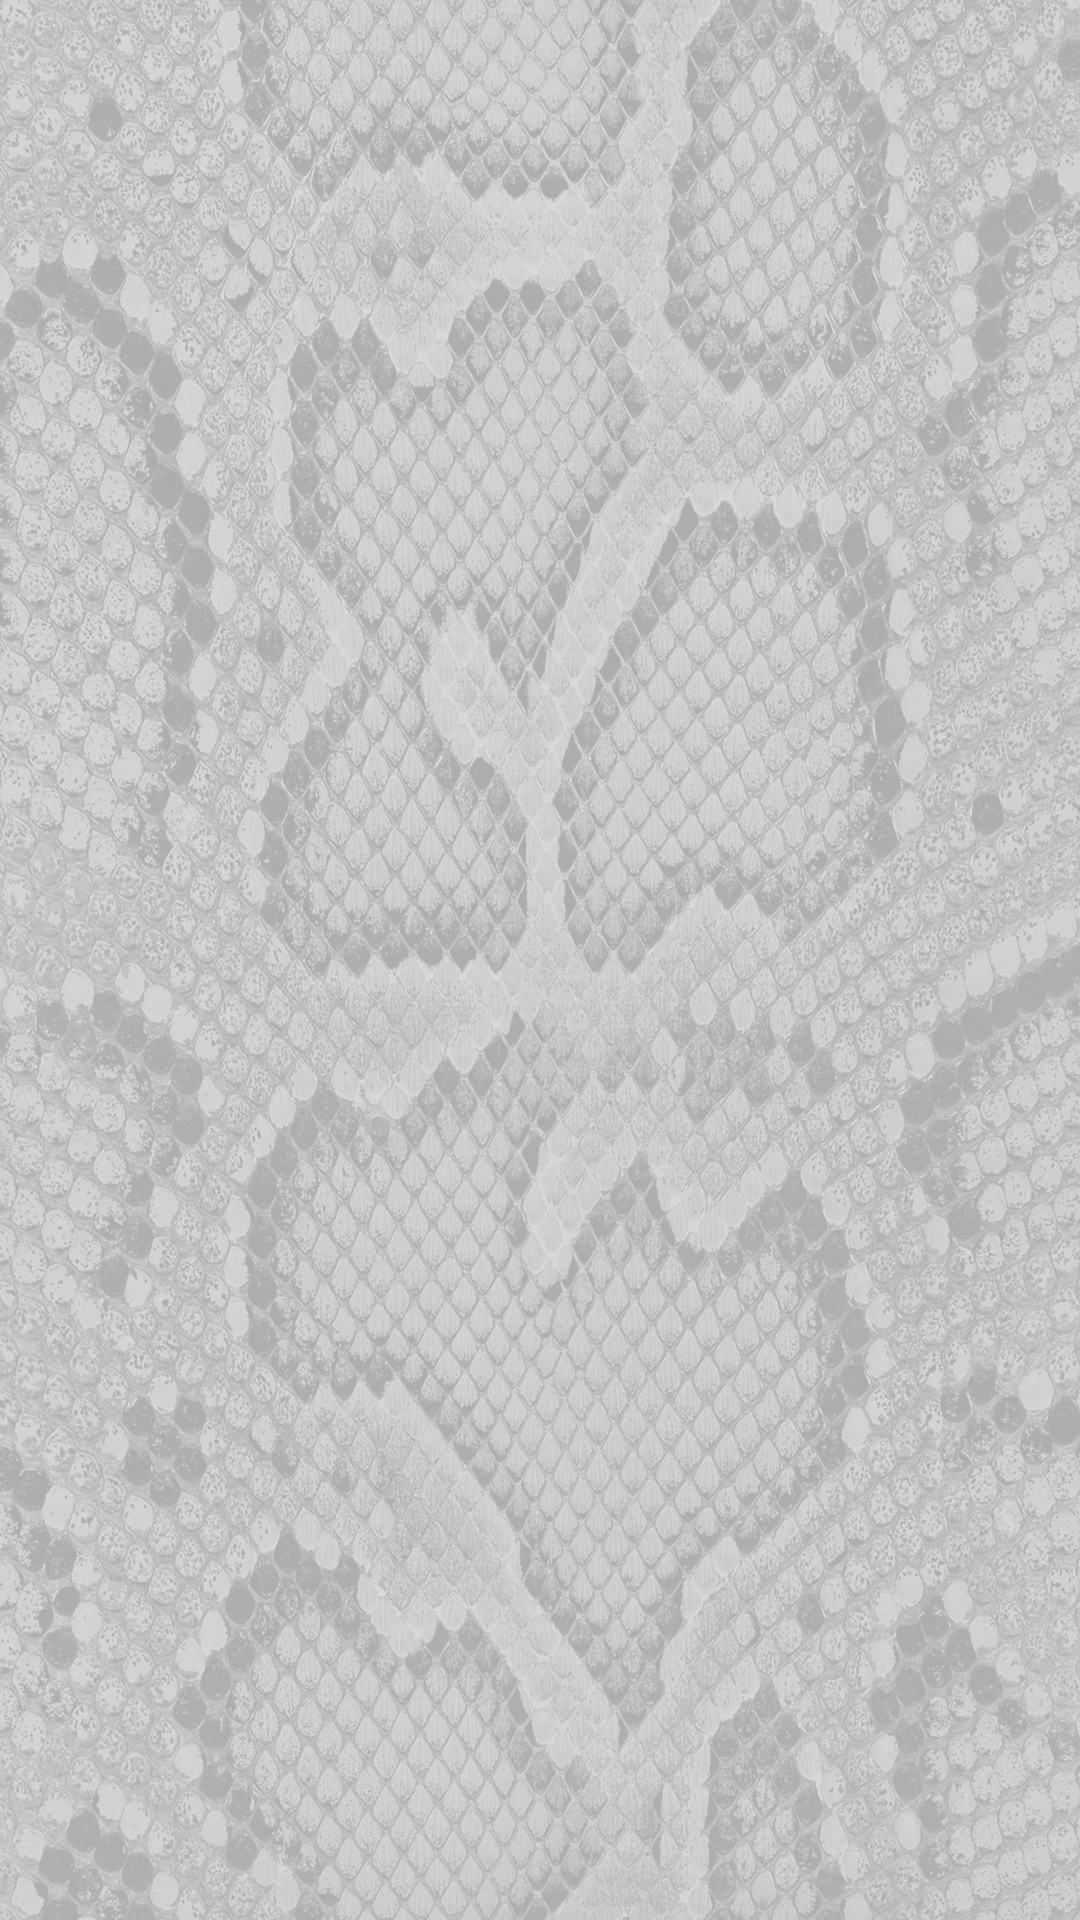 Python Pattern Gray Wallpaper Sc Iphone7plus